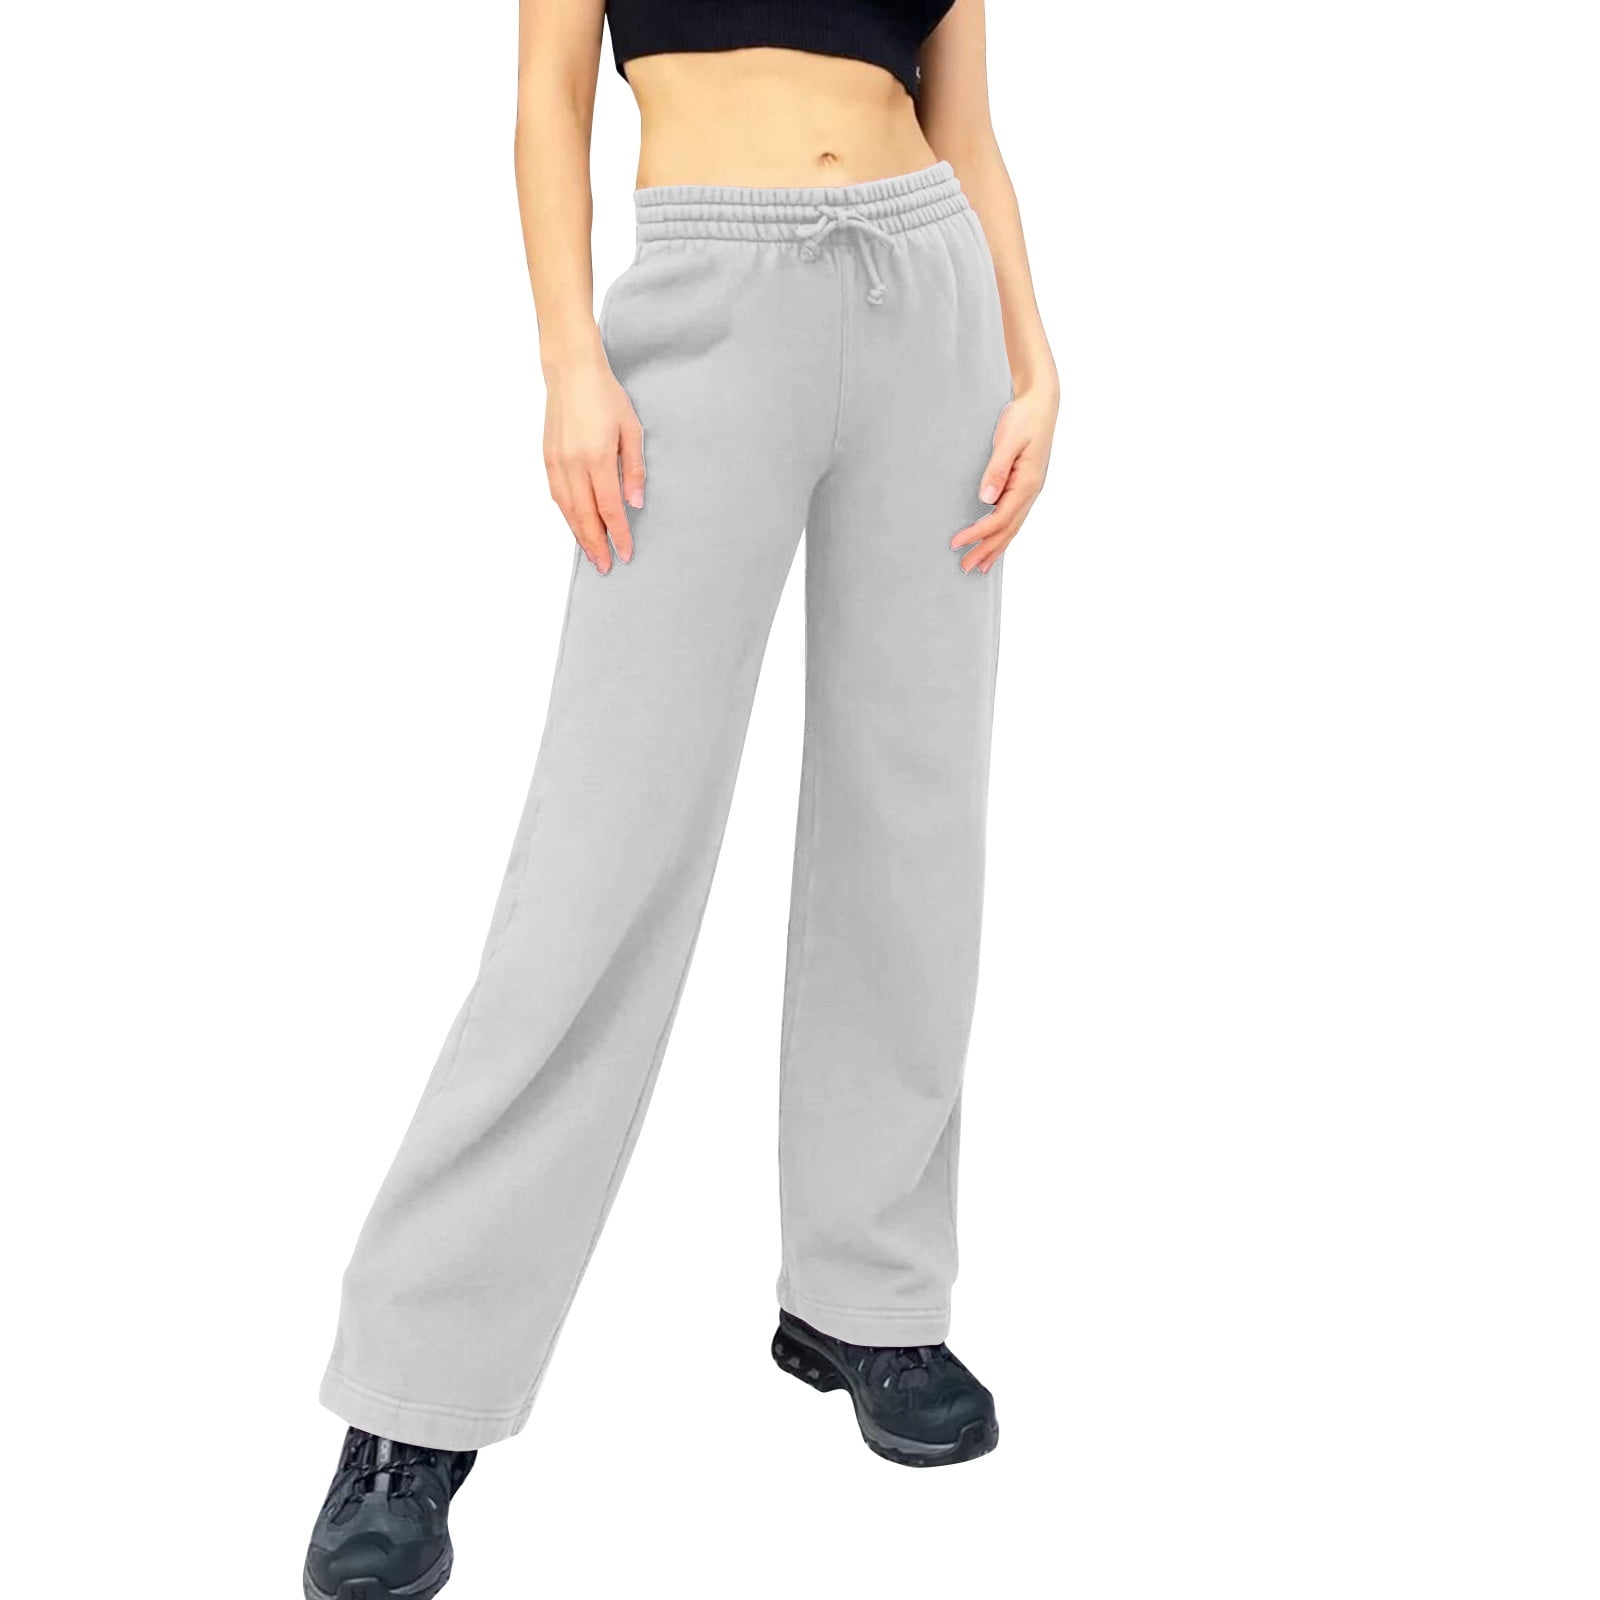 Susanny Sweatpants for Girls Straight Leg with Pockets Fleece